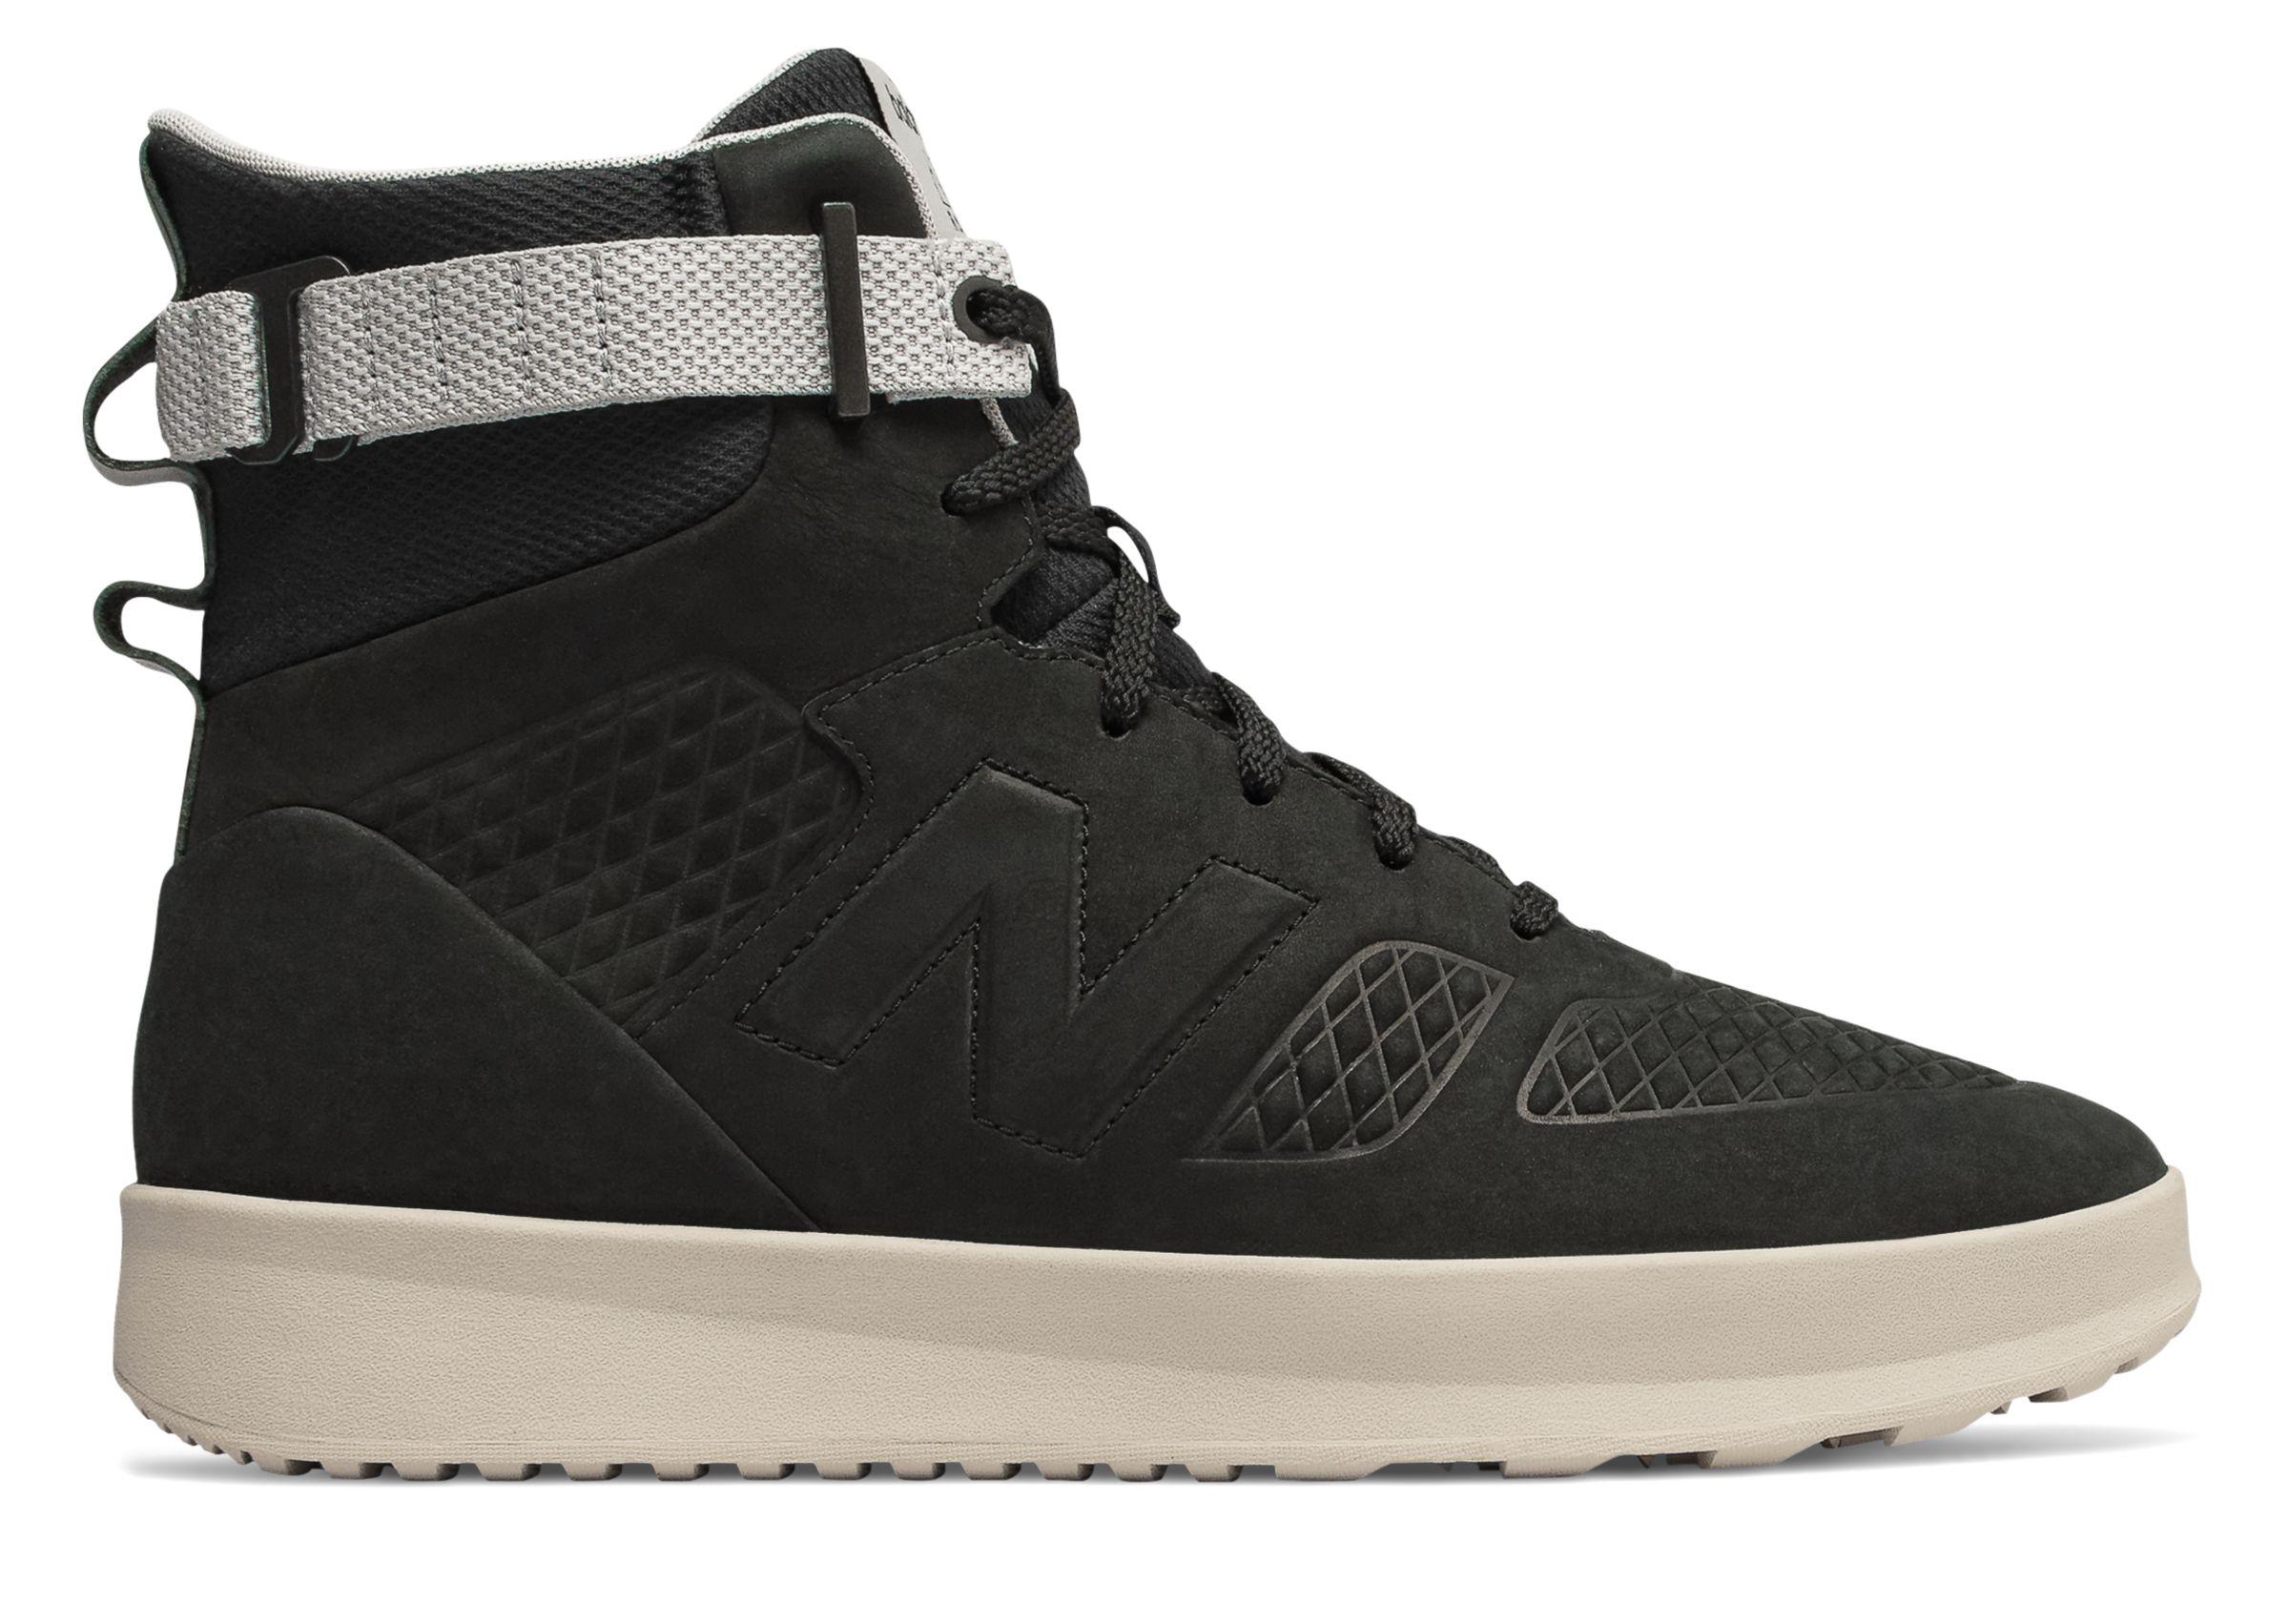 New Balance Ranier Moda Sneaker Boots in Black for Men - Lyst